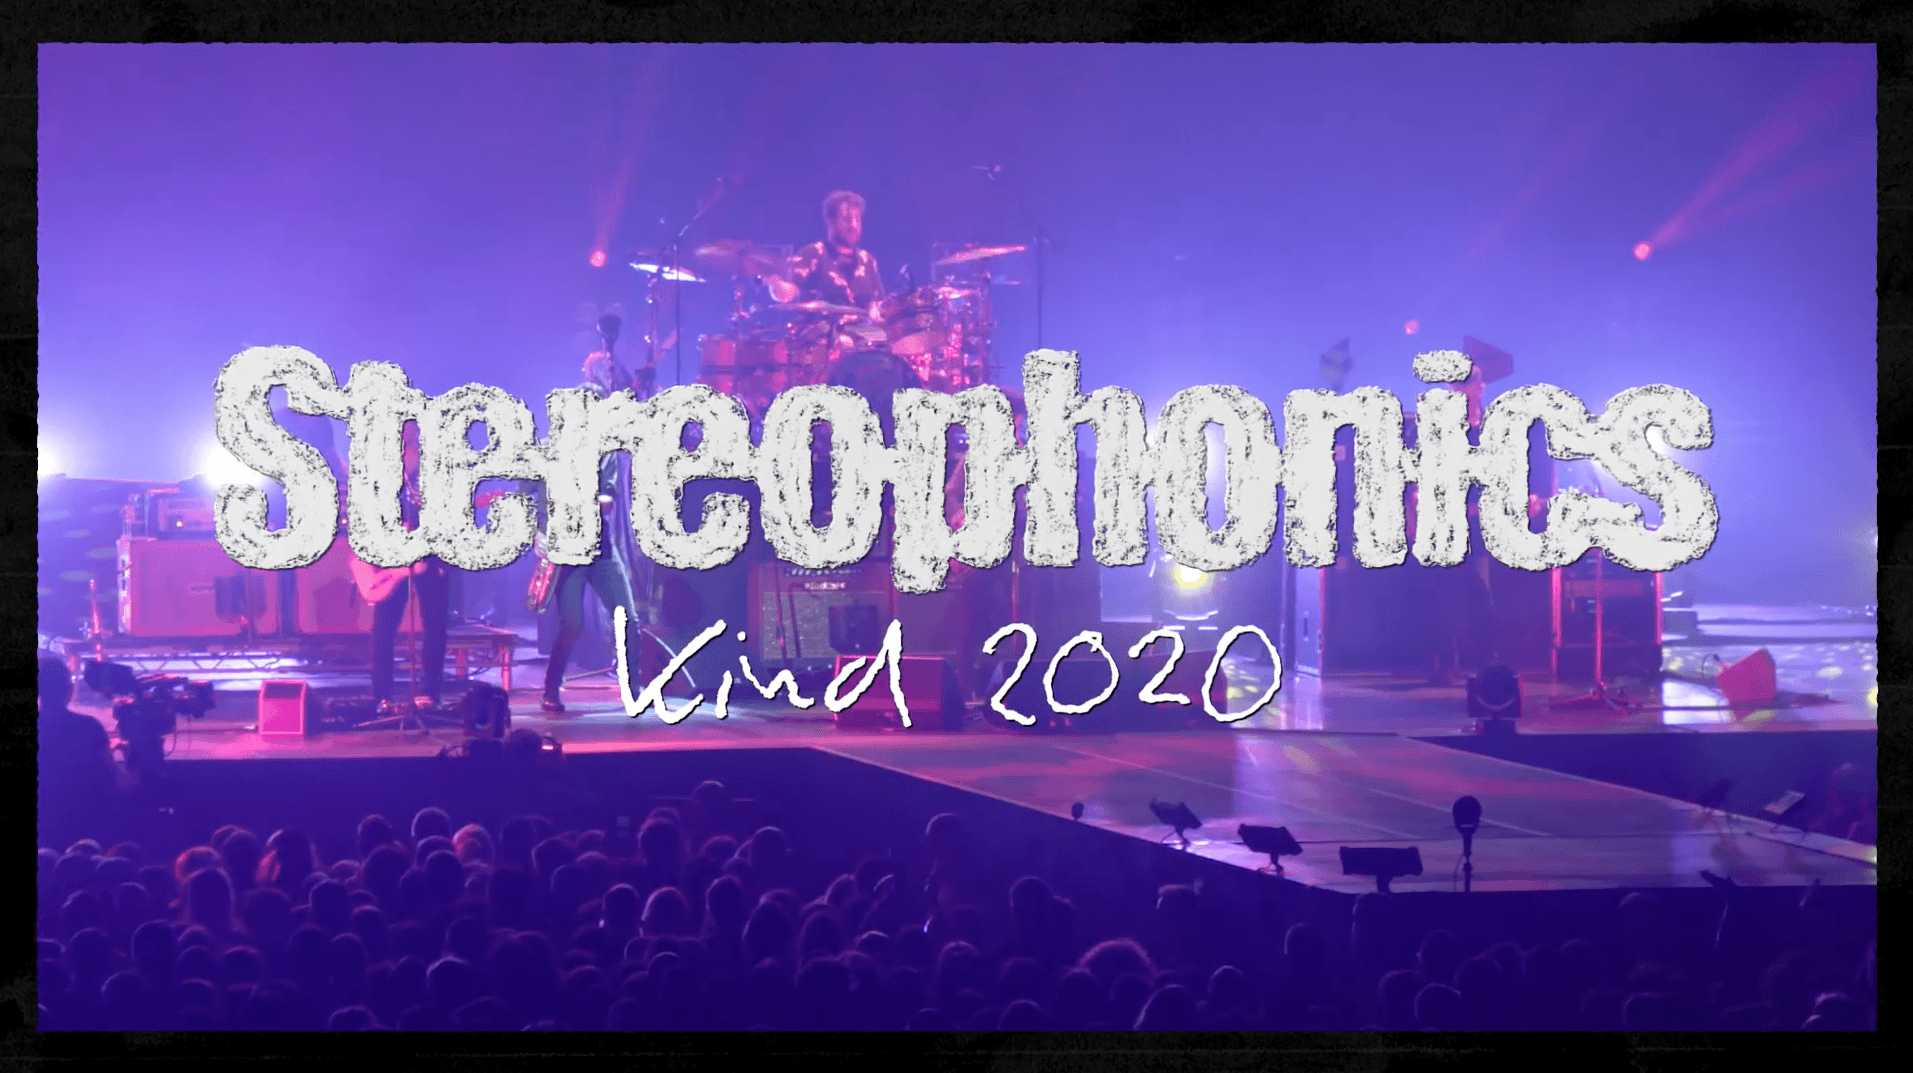 Stereophonics - Kind 2020